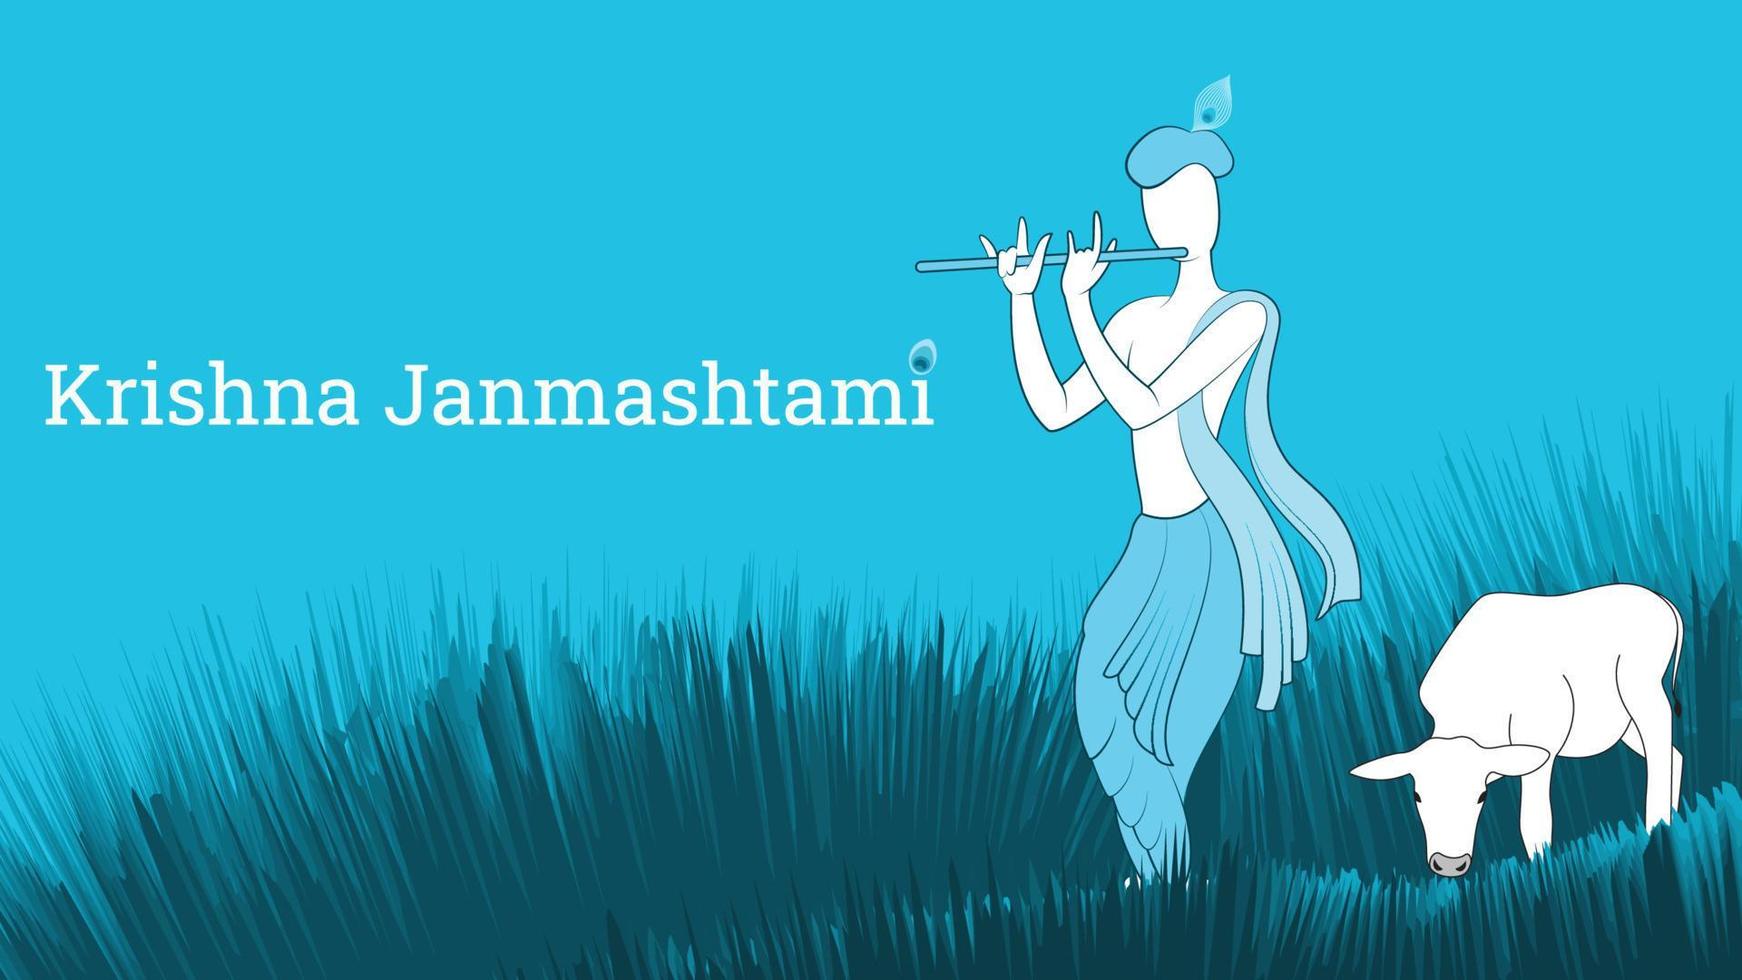 sri krishna spielt flöte auf gras, fröhliche janmashtami-vektorillustration. vektor